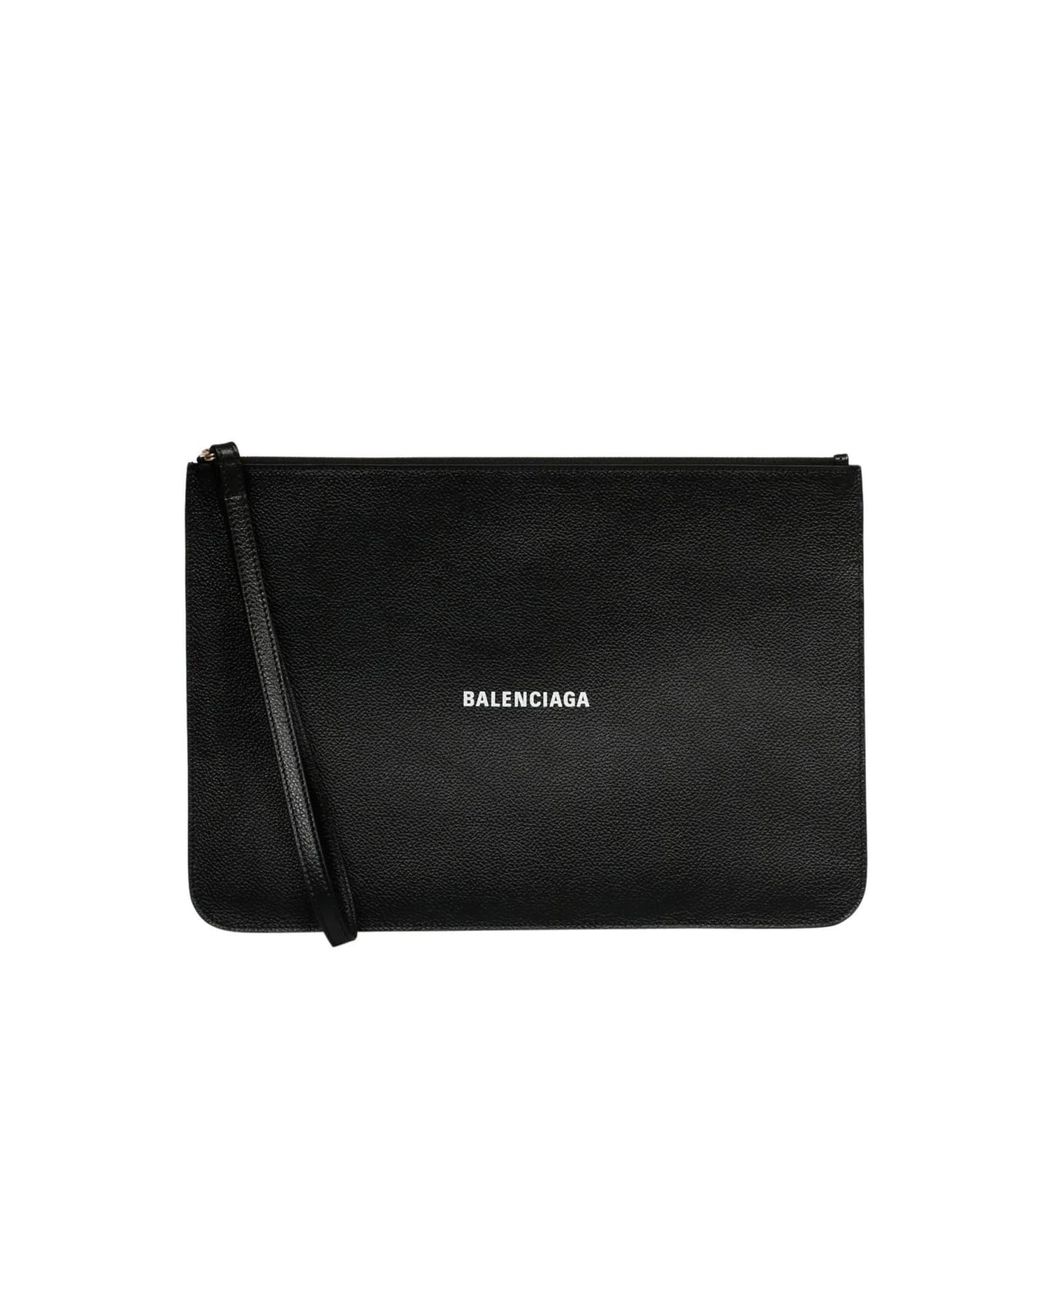 Balenciaga Logo Leather Pouch in Black - Save 7% | Lyst